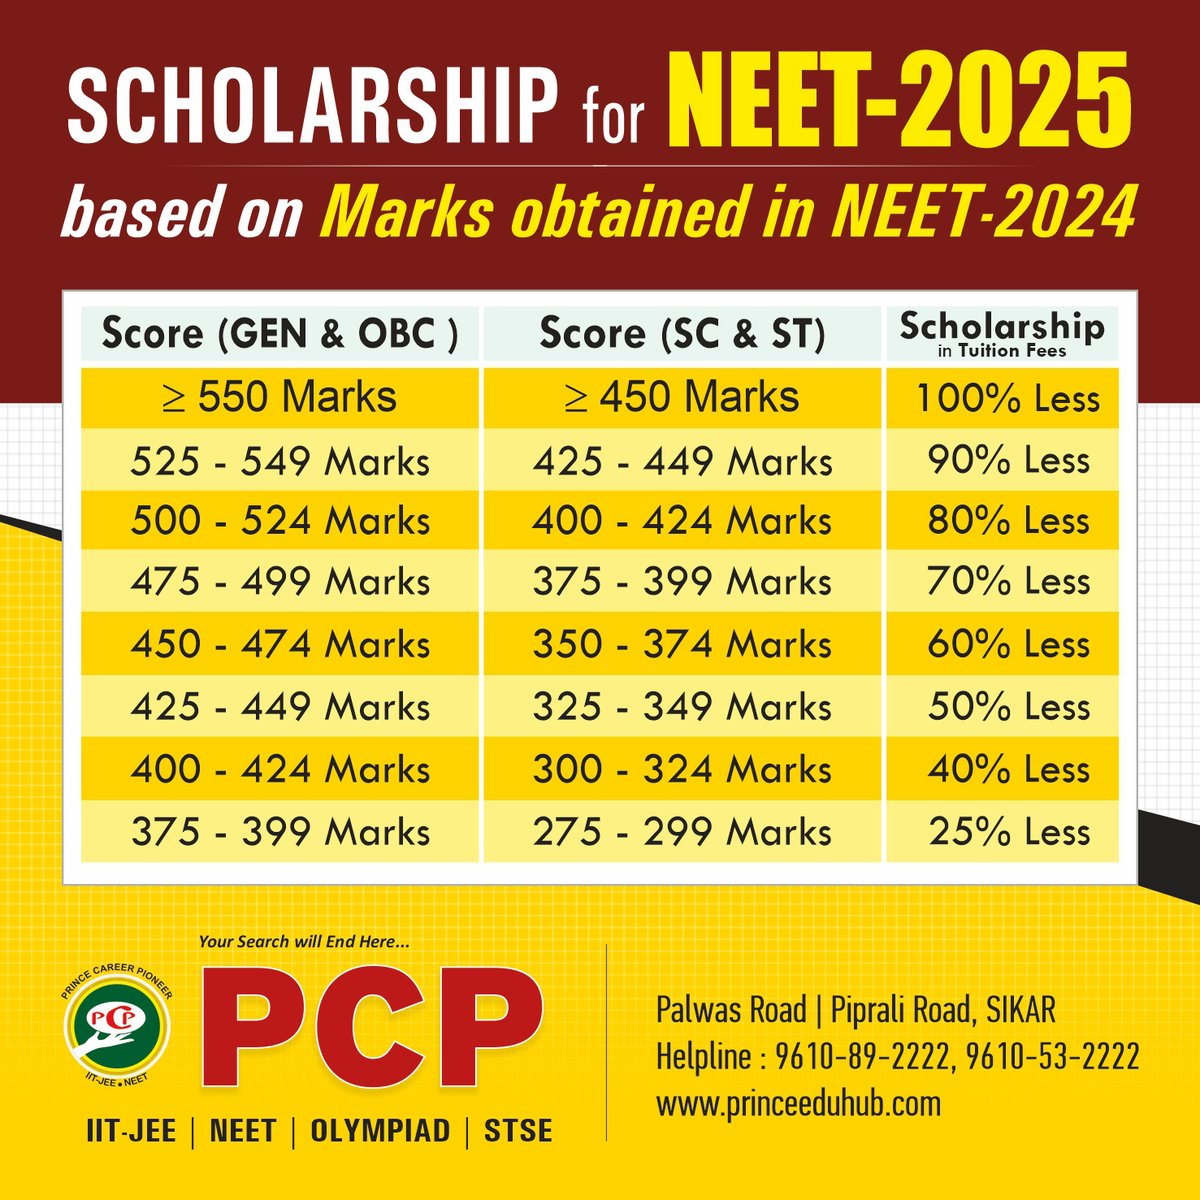 👨‍🎓Scholarship for NEET-2025
🎯based on Marks obtained in NEET-2024
 #iitjee #JEEAdvanced2024 #jeeadvanced #pcpsikar #iitjee2024 #NEET #EducationOpportunities #EnrollNow #AdmissionsOpen #QualityEducation #bestneetcoaching #education